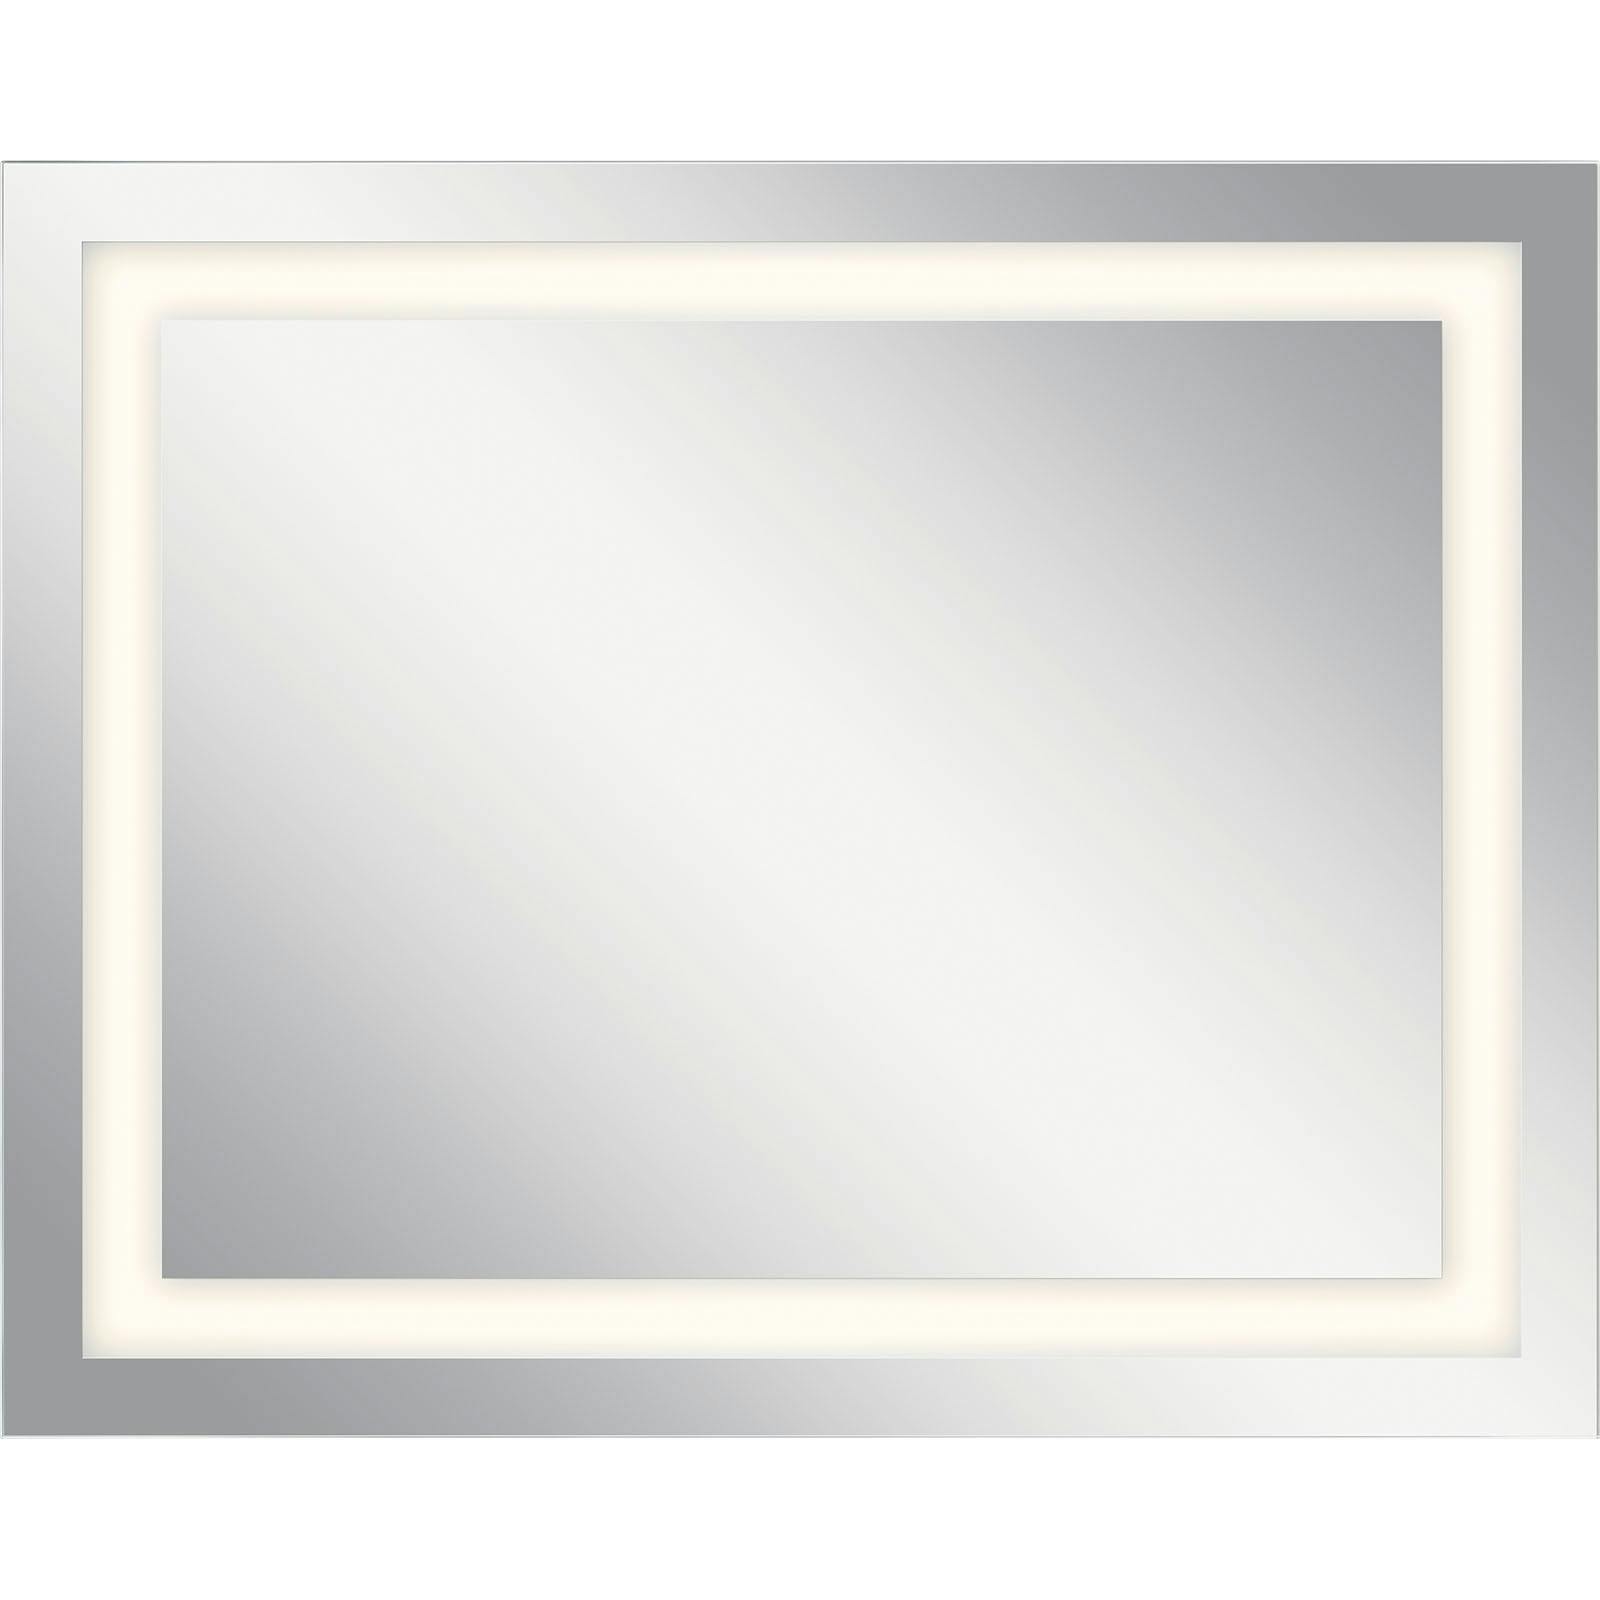 24" x 30" Rectangular LED Backlit Mirror on a white background